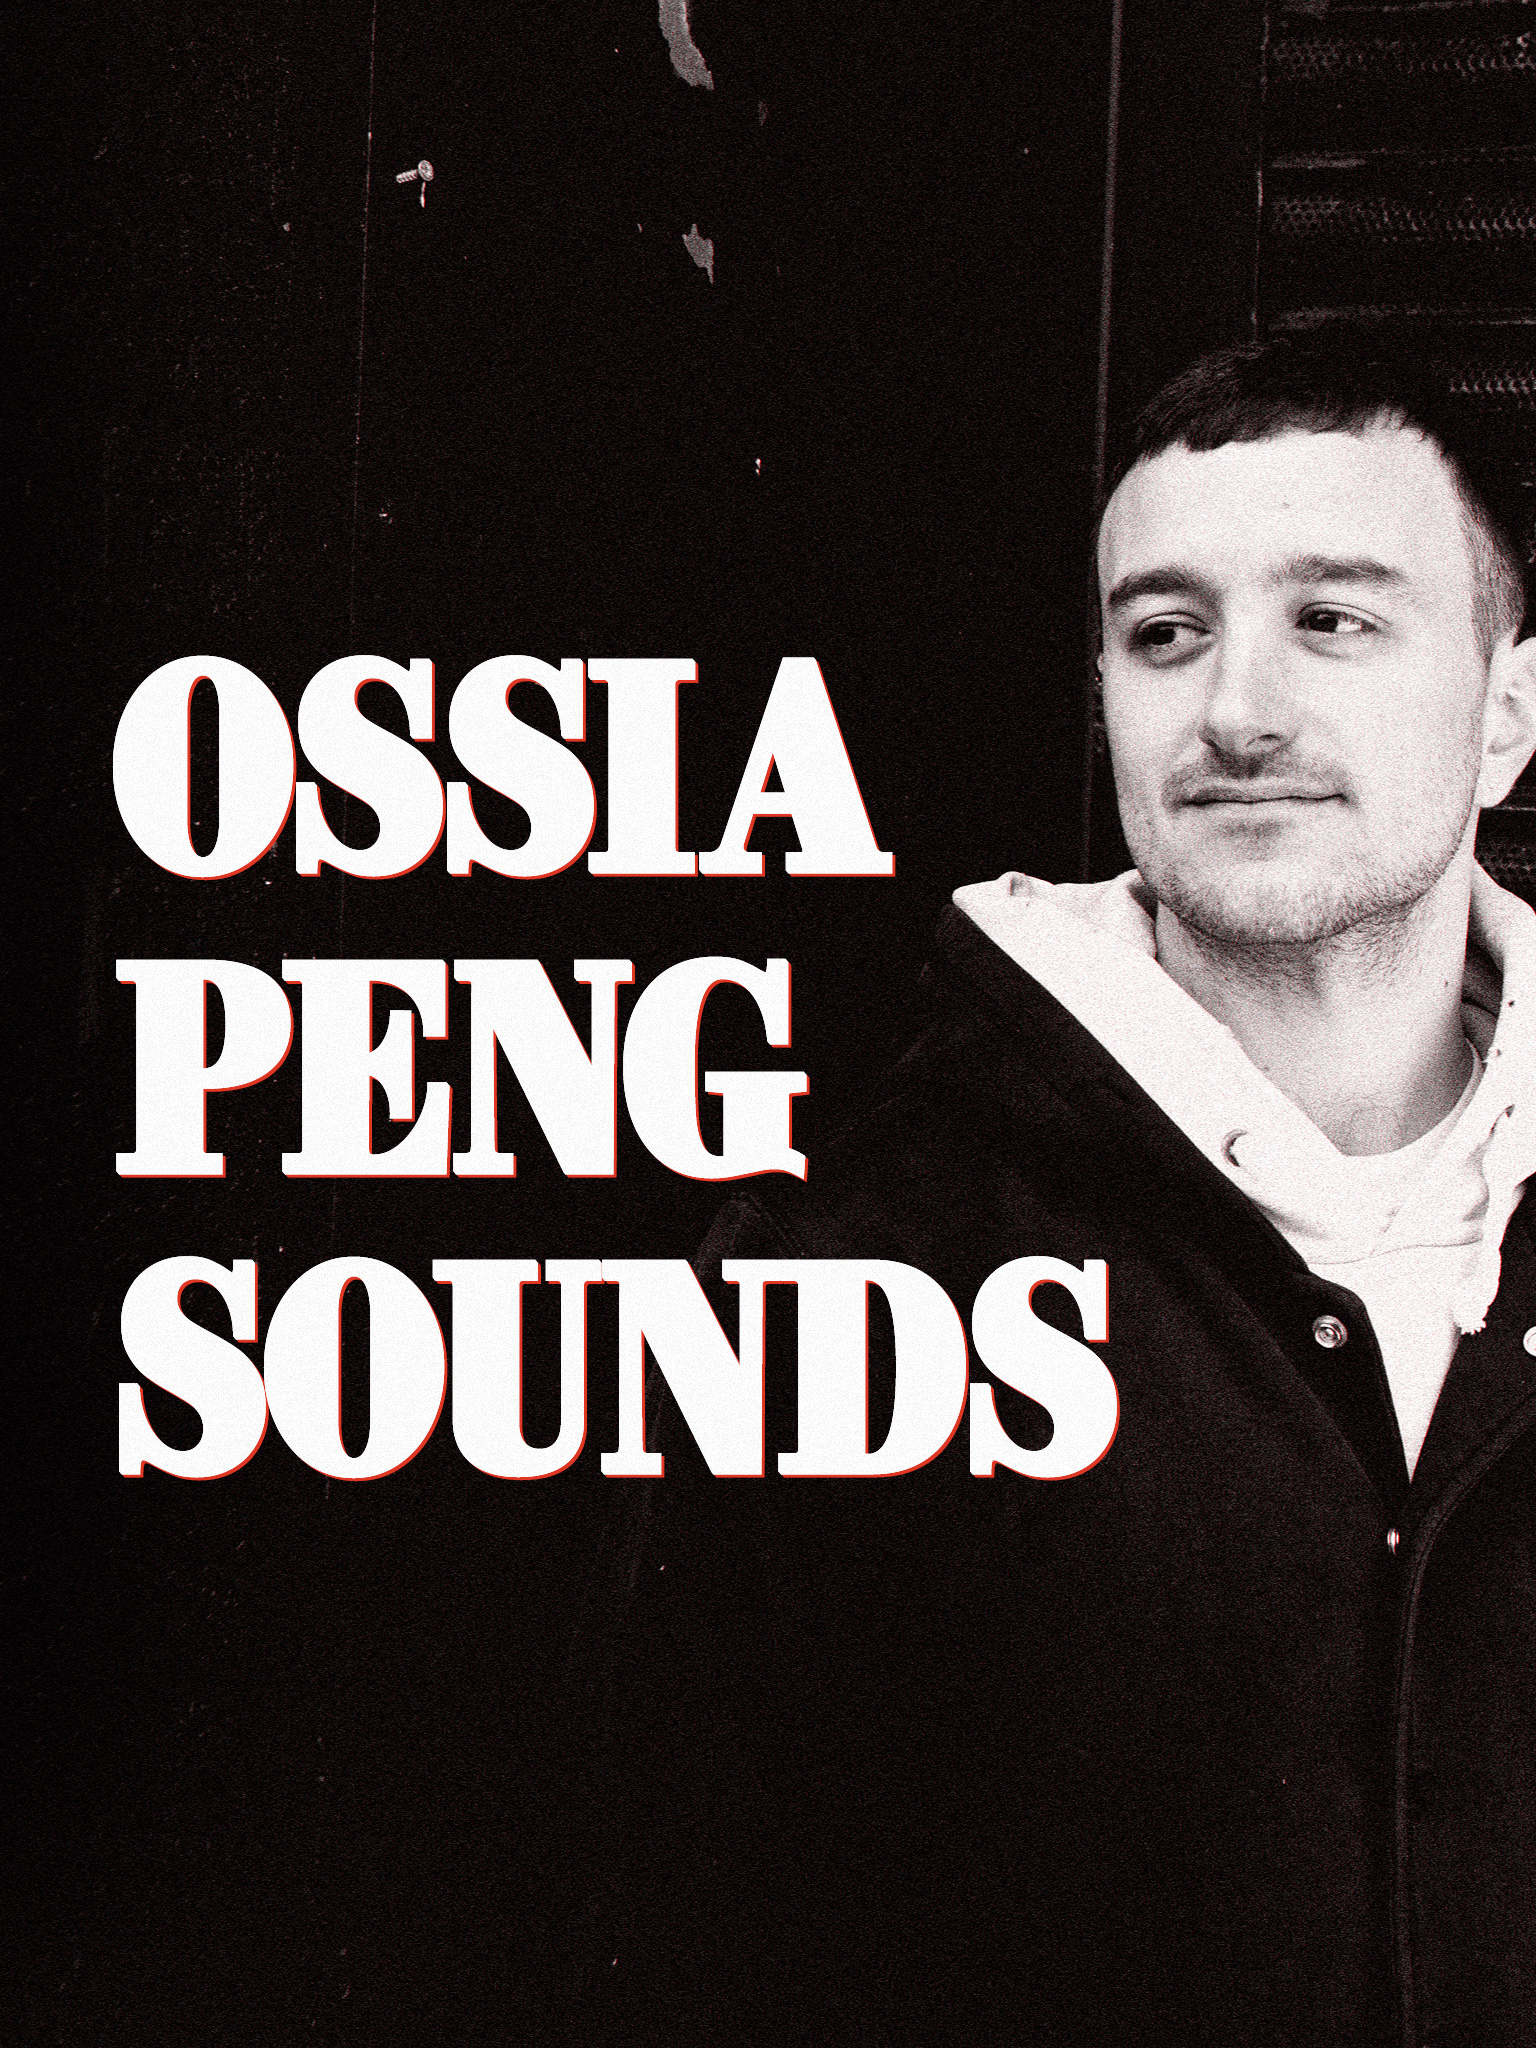 Ossia: Peng sounds